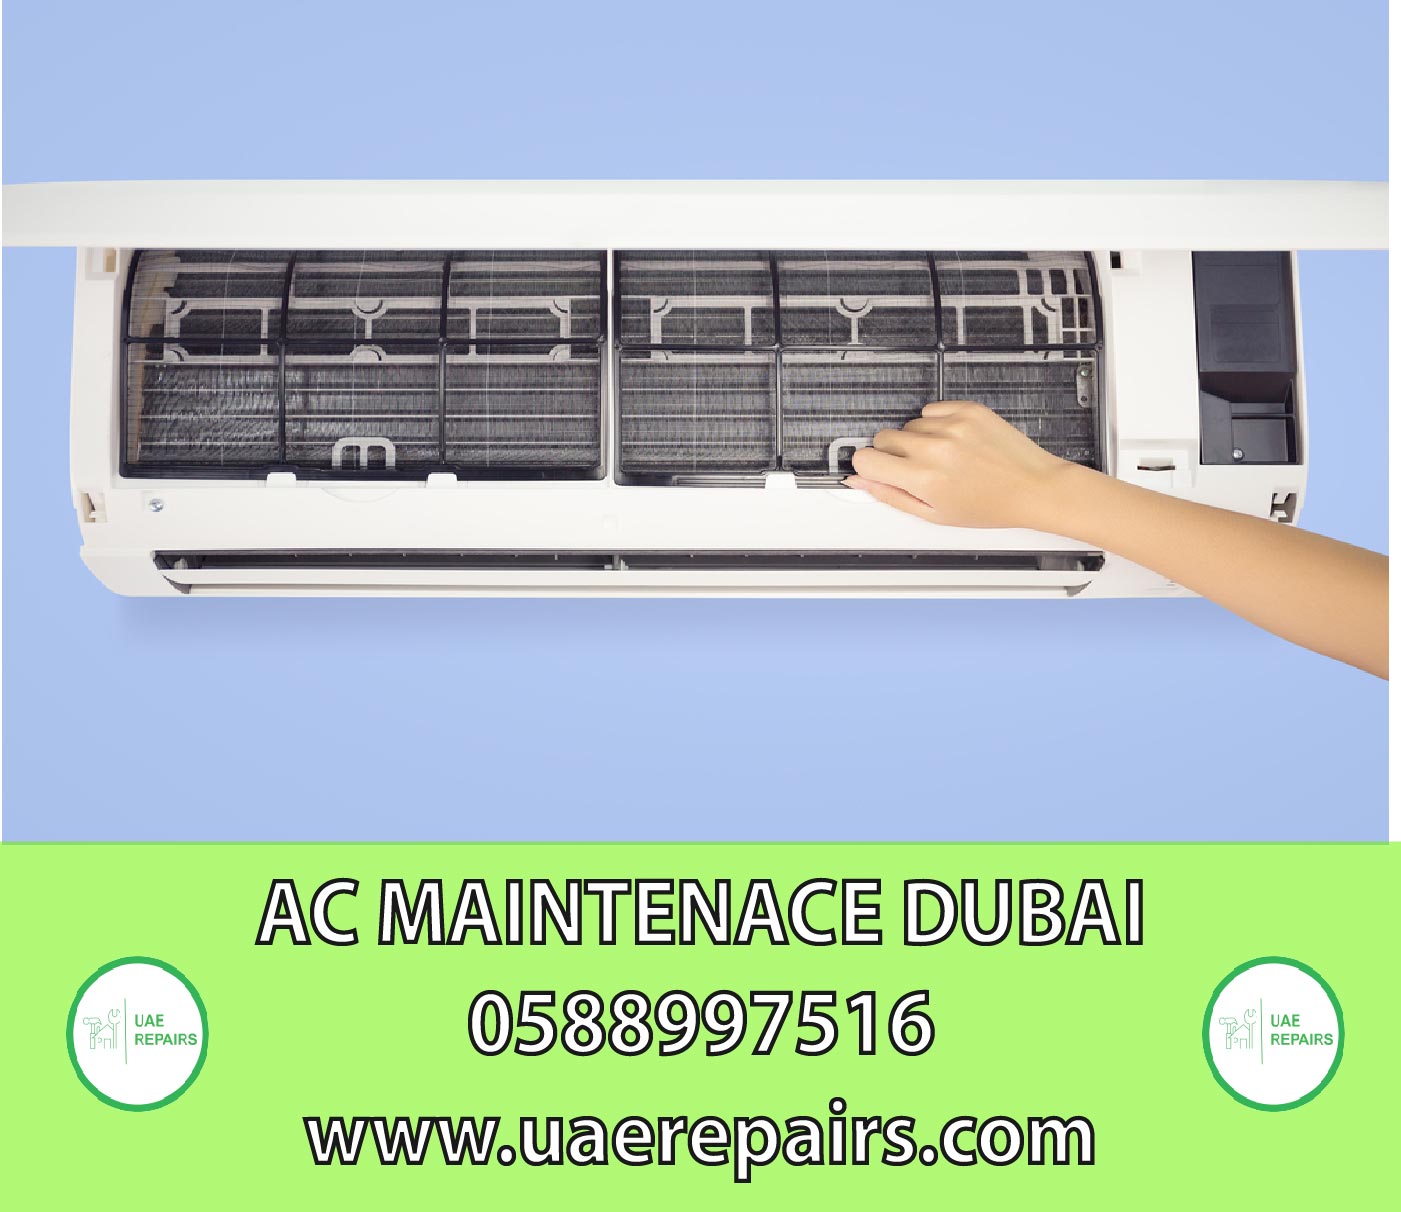 Maintenance of AC in Dubai by UAE REPAIRS